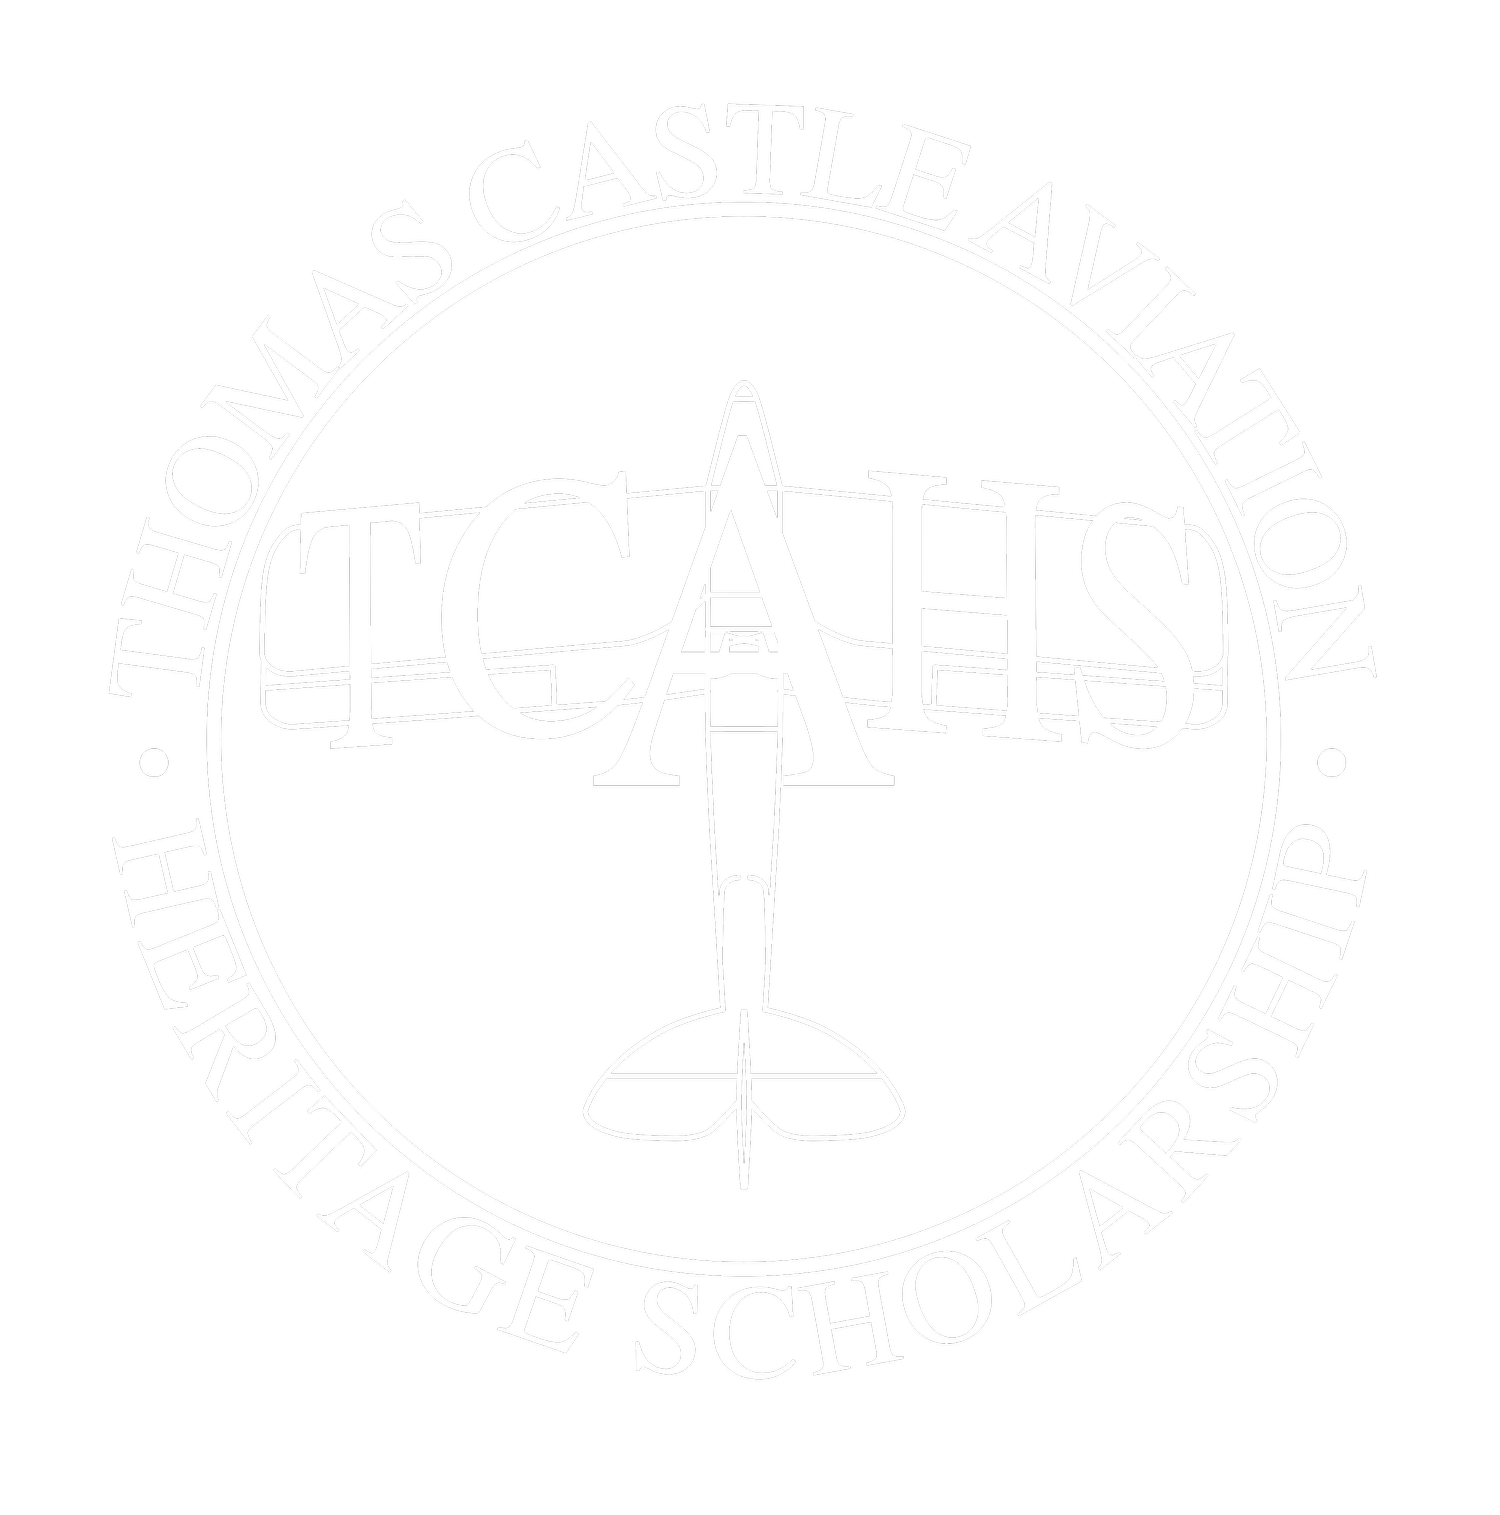 Thomas Castle Aviation Heritage Trust